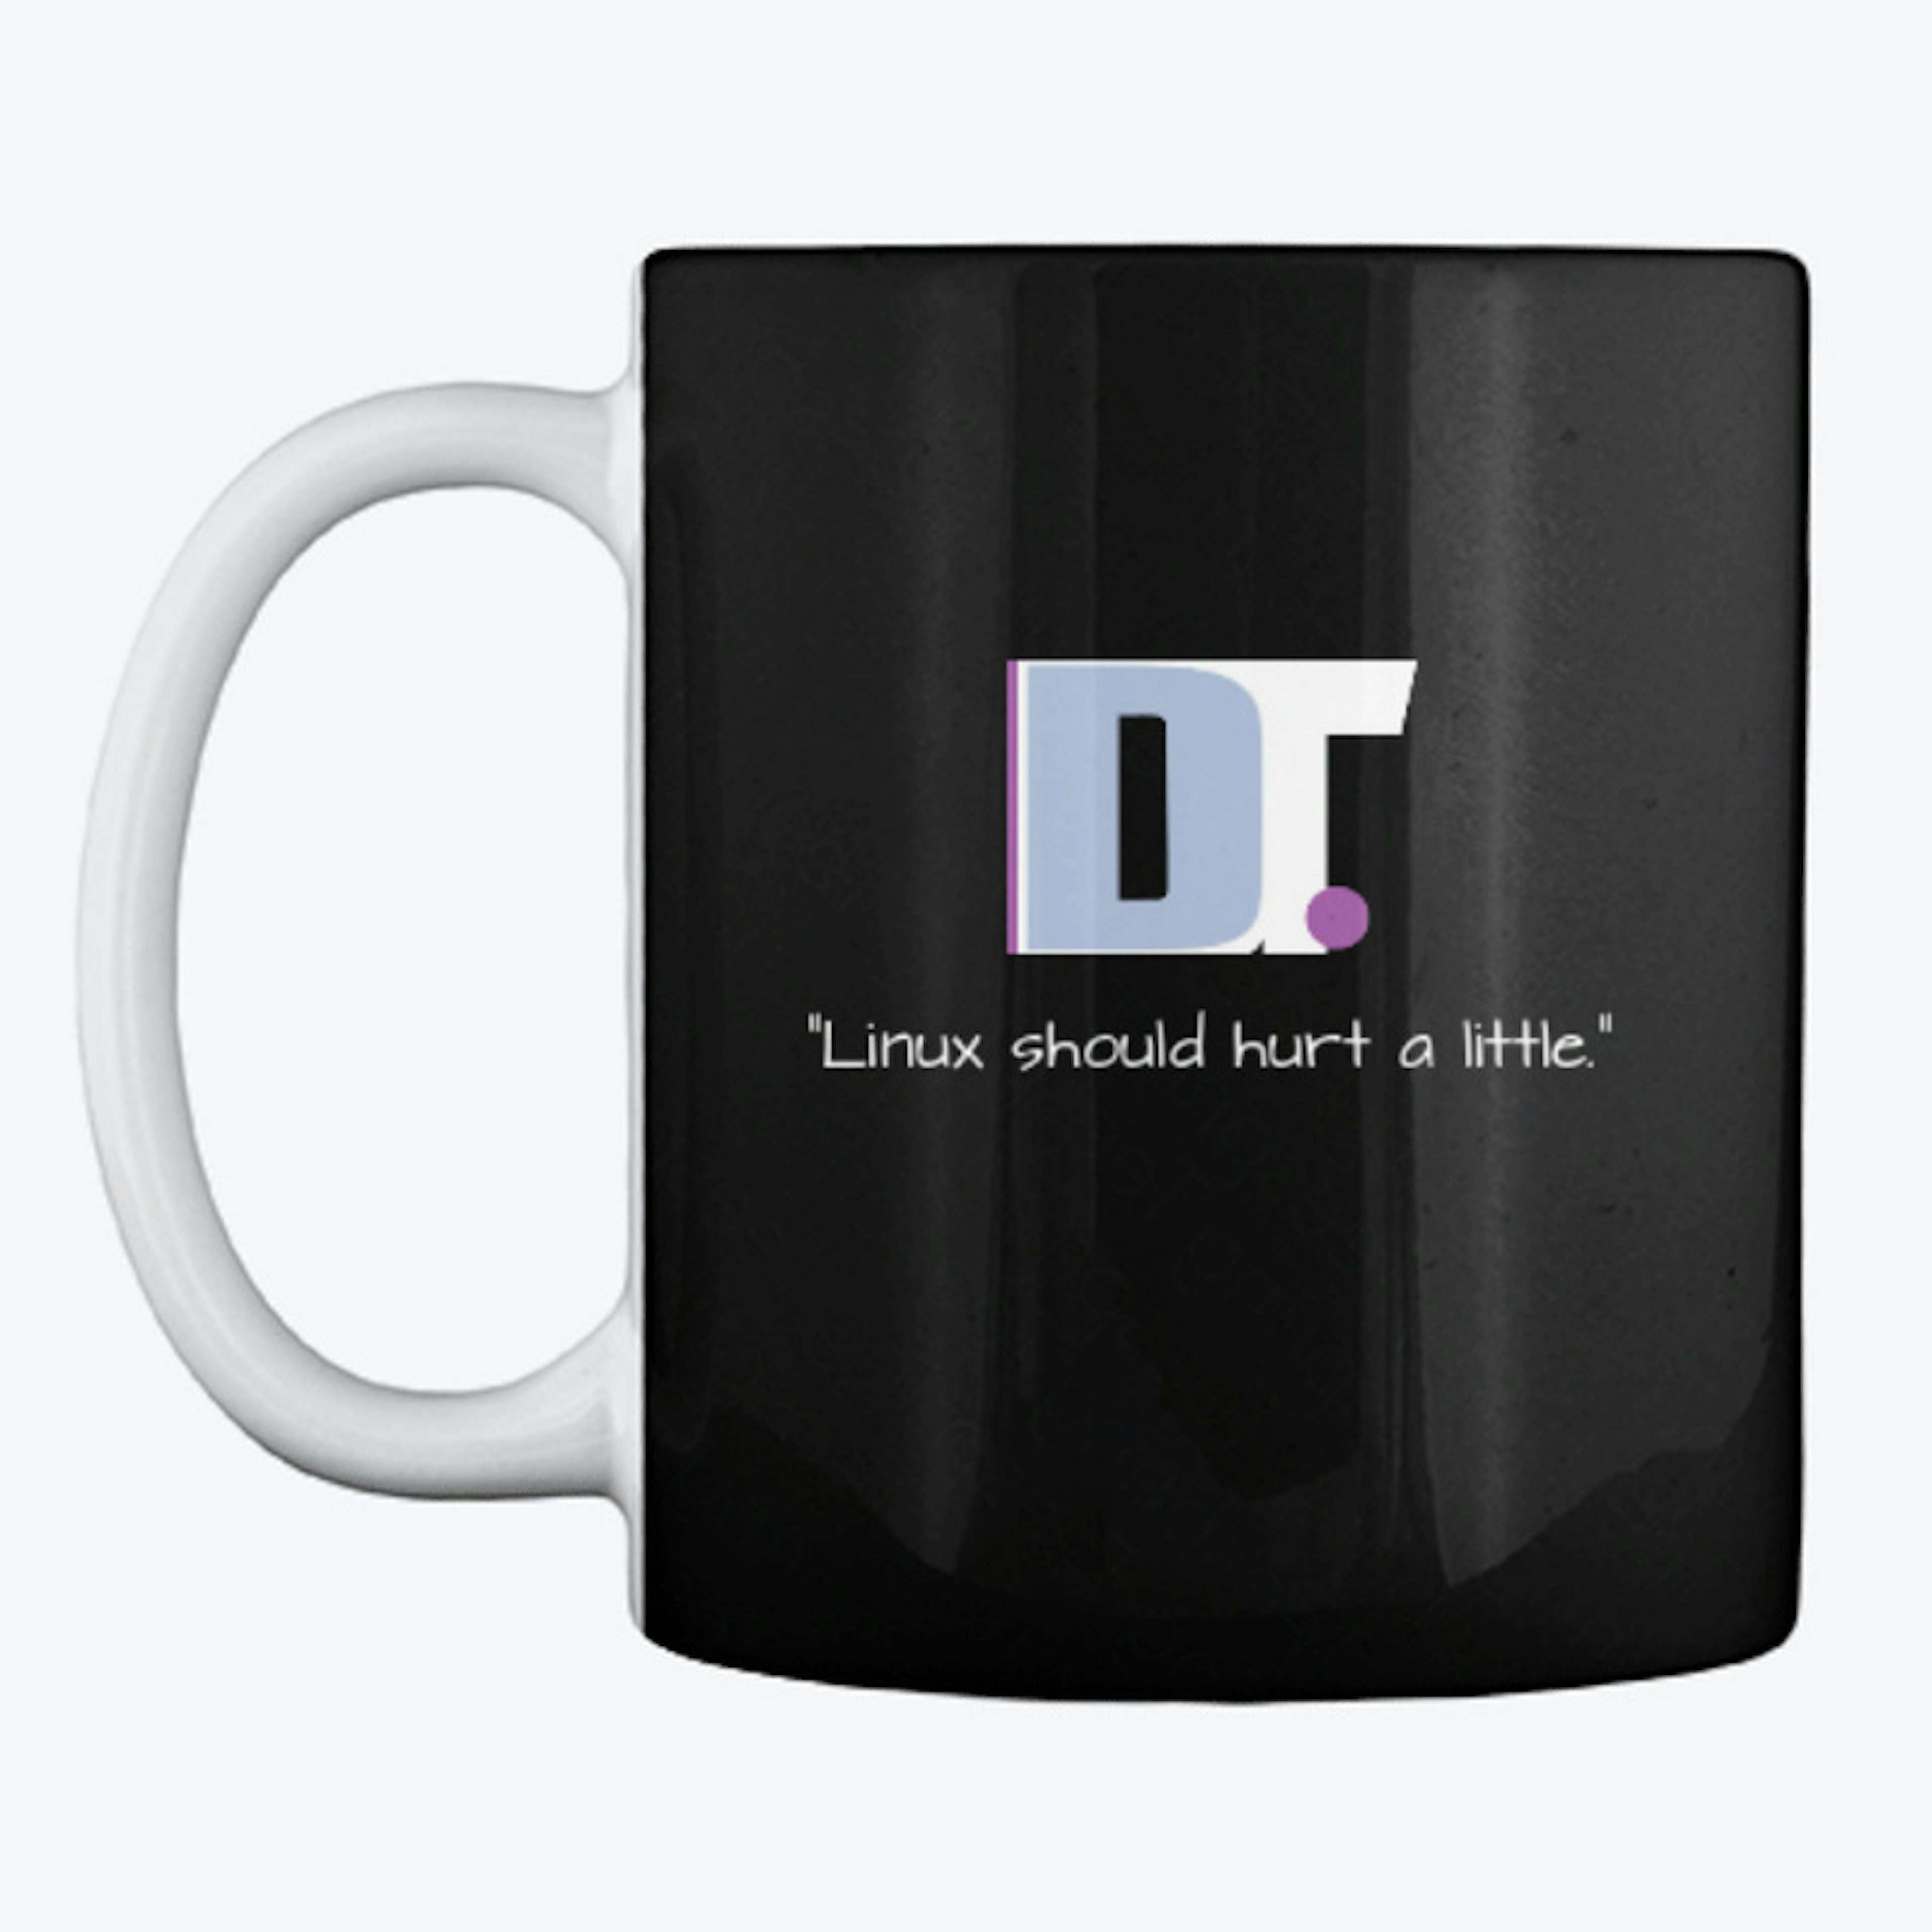 Linux should hurt a little (mug)